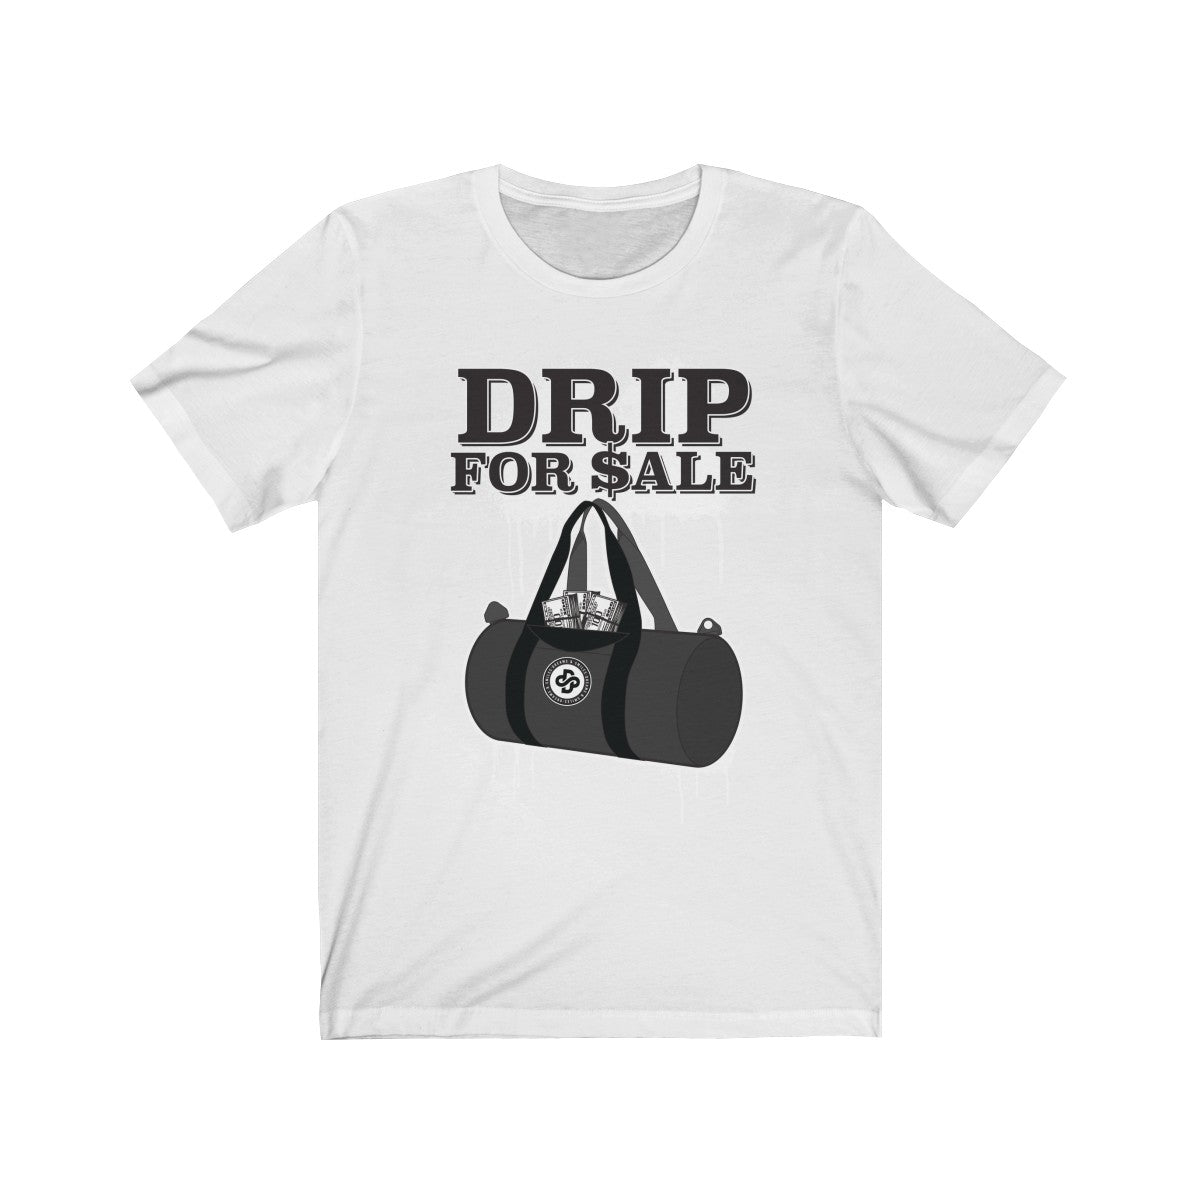 'Drip For Sale' in Black Short Sleeve Tee